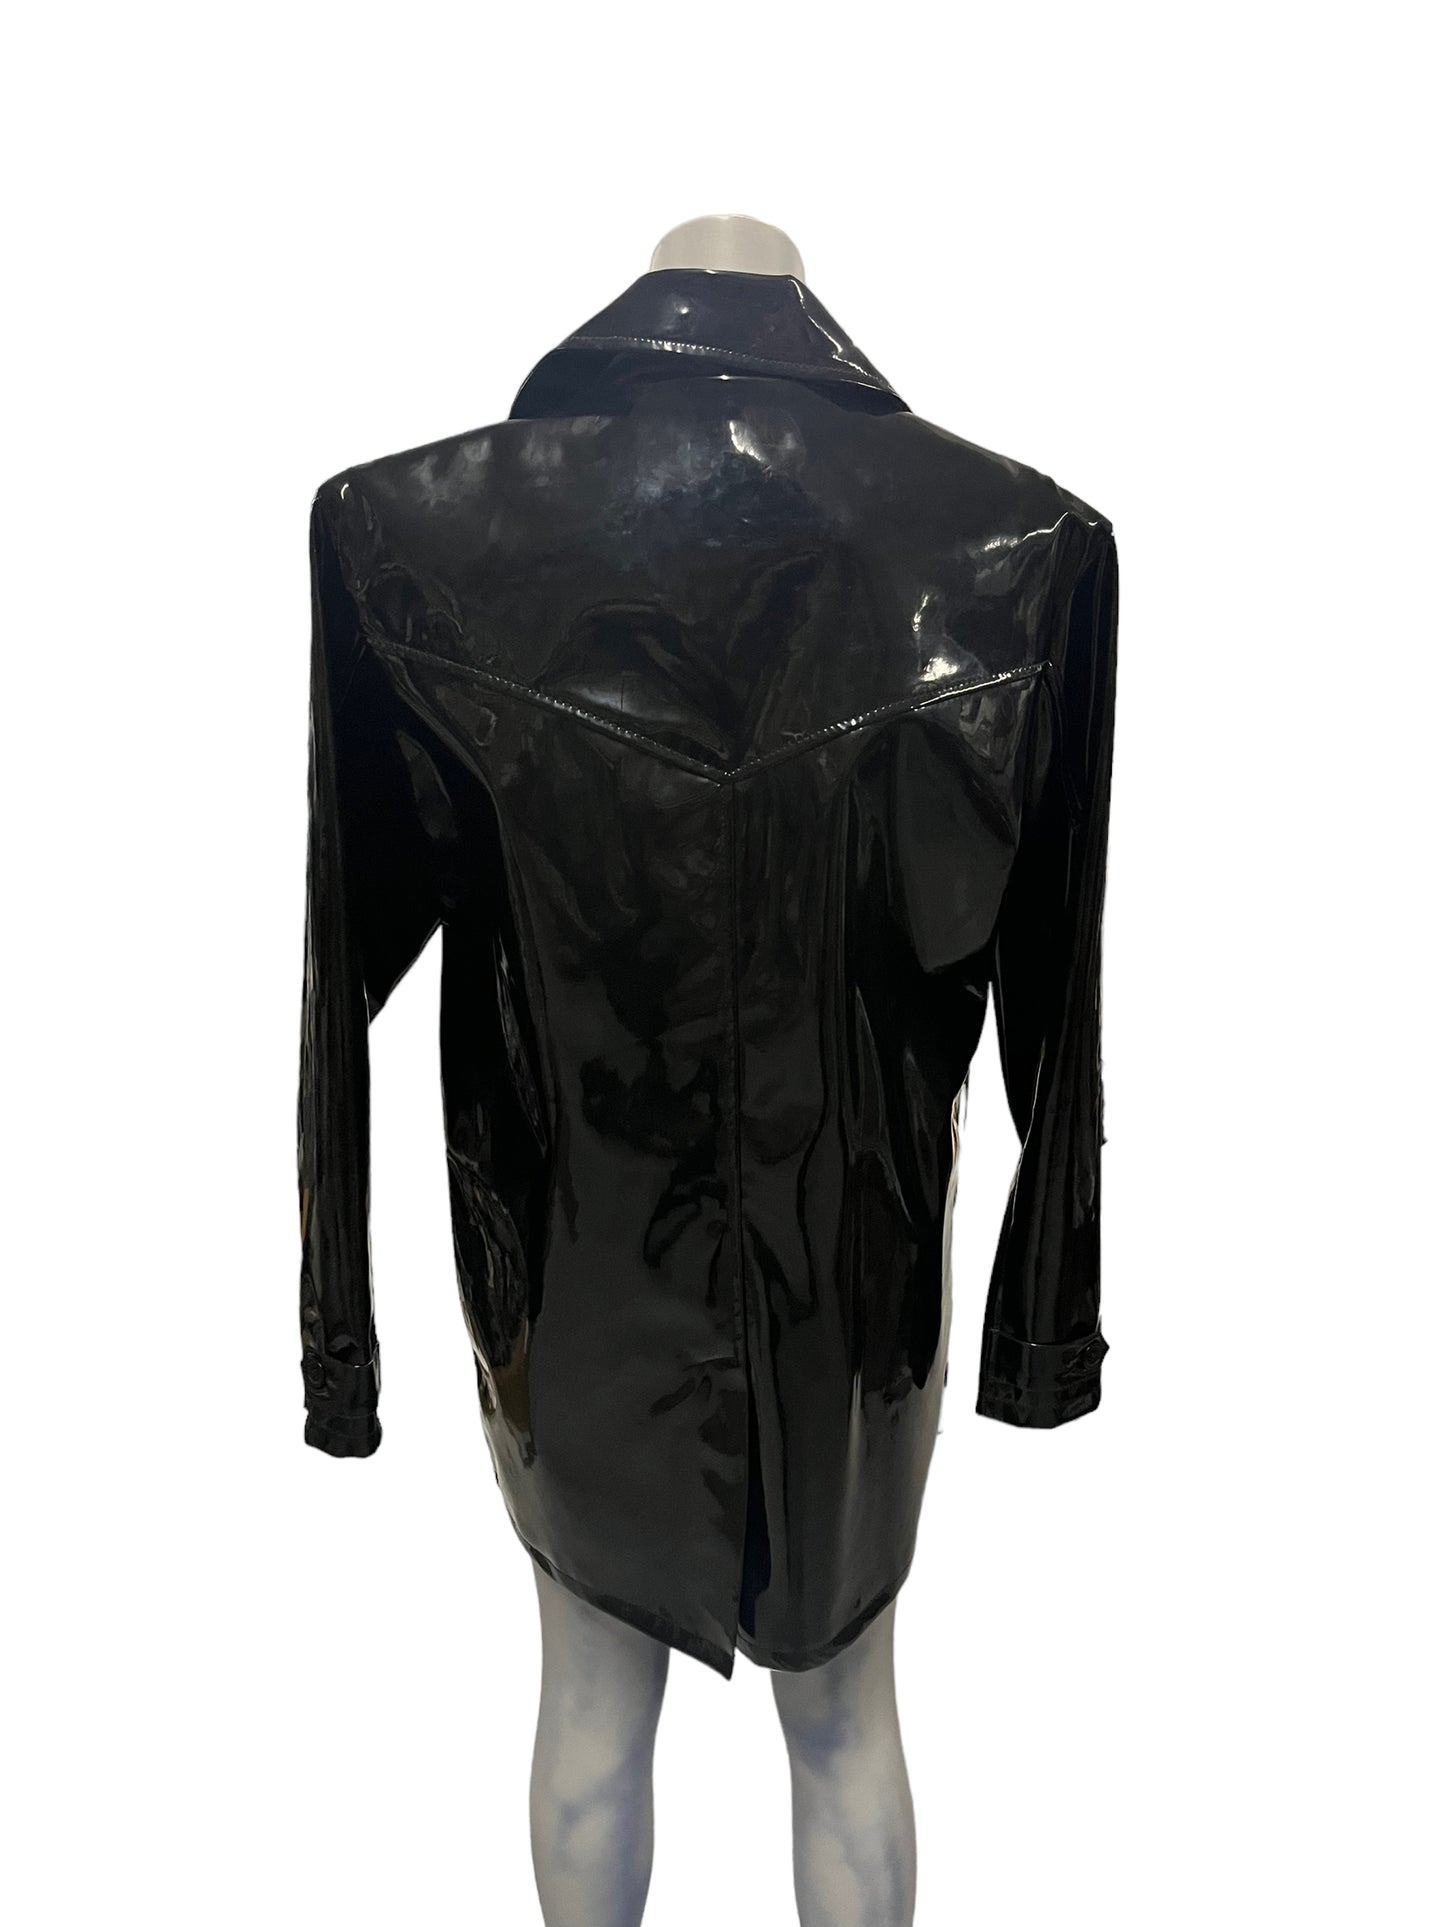 Fashion World - LL95 - Provocative Long Black Jacket With Belt - Size XL